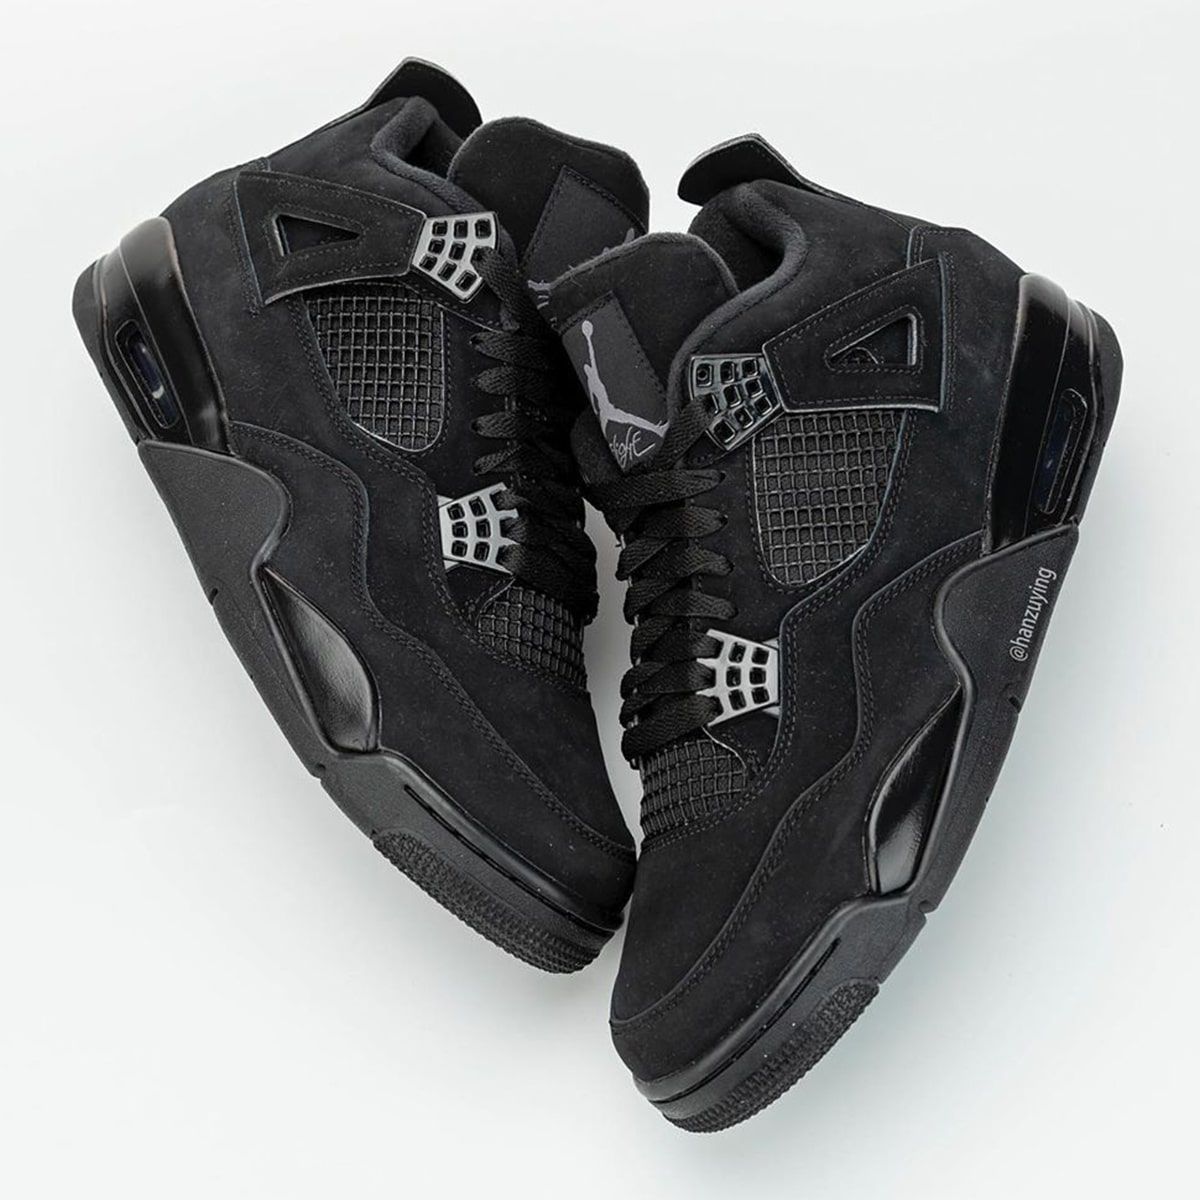 Air Jordan 4 “Black Cat” Women's Shoe